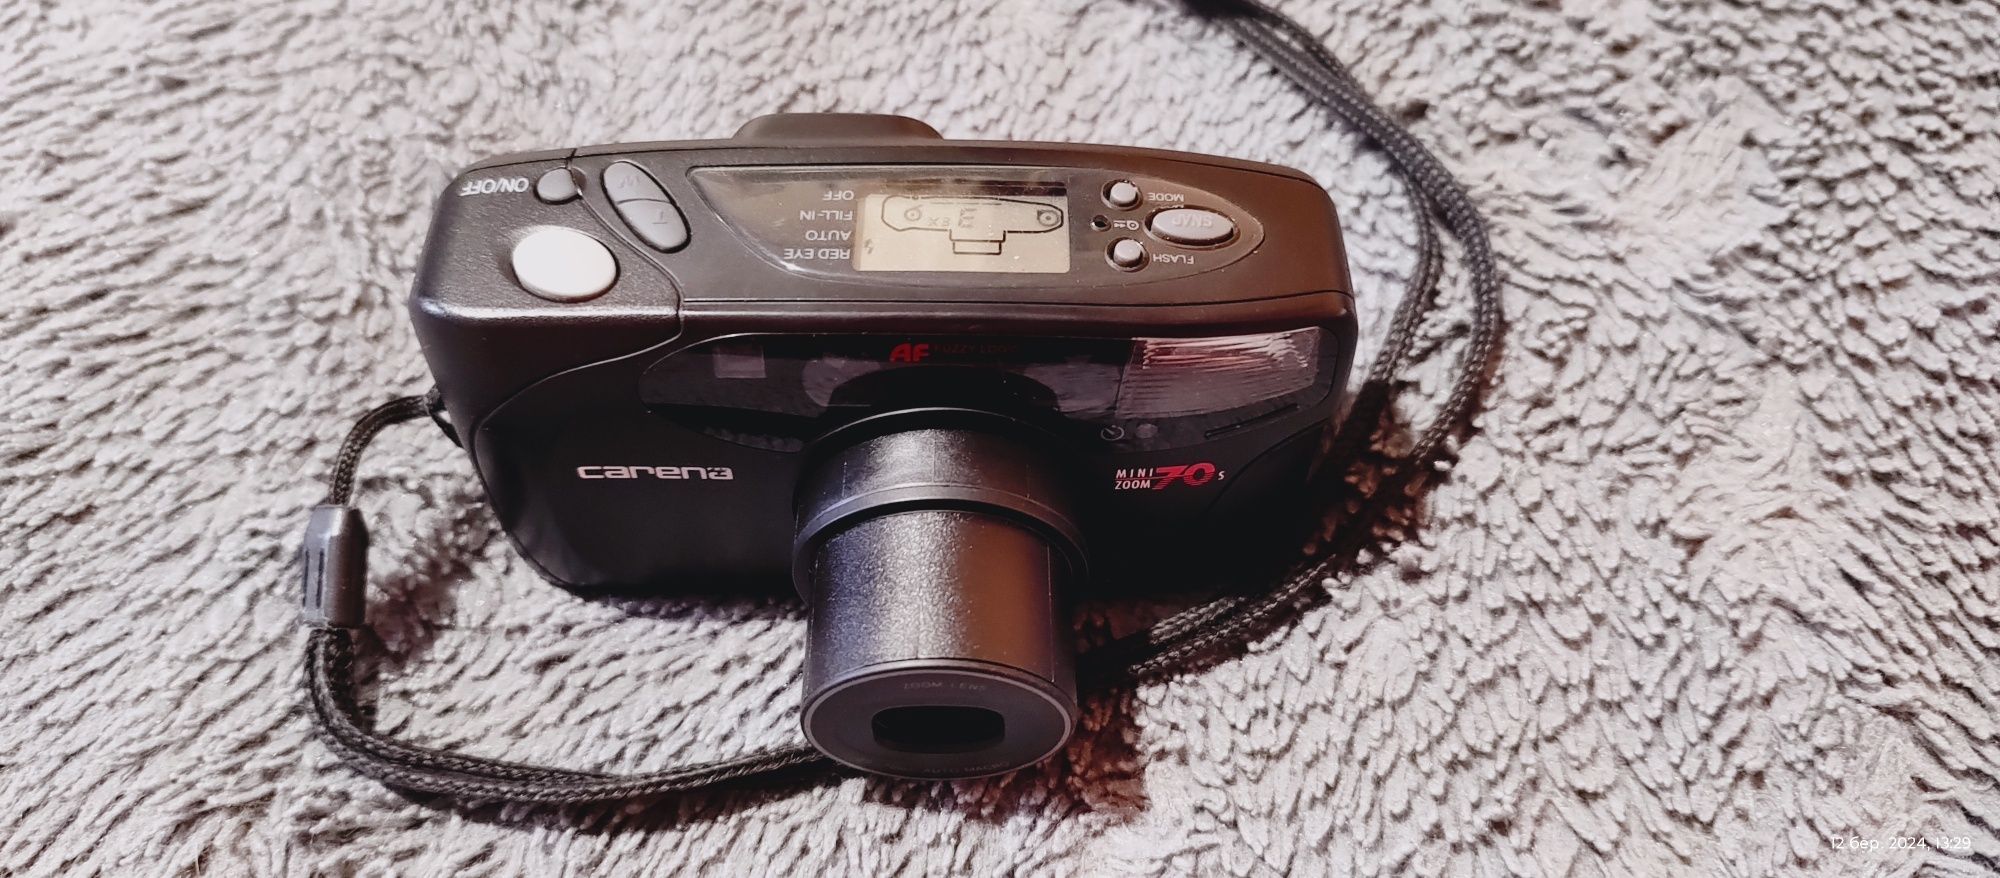 Фотоаппарат плёночный Carena mini zoom 70s